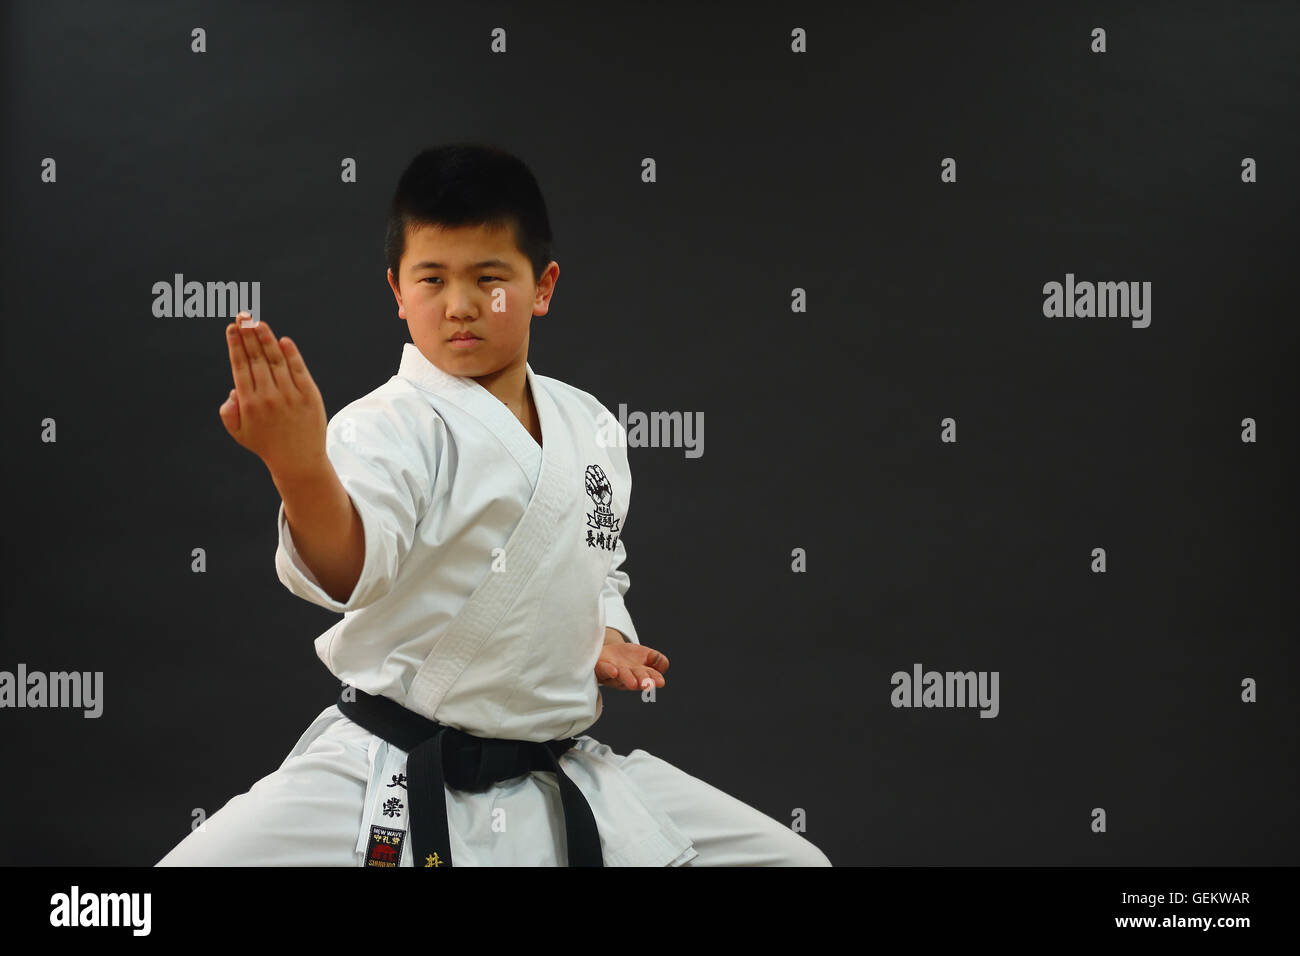 Japanese kid in karate uniform on black background Stock Photo